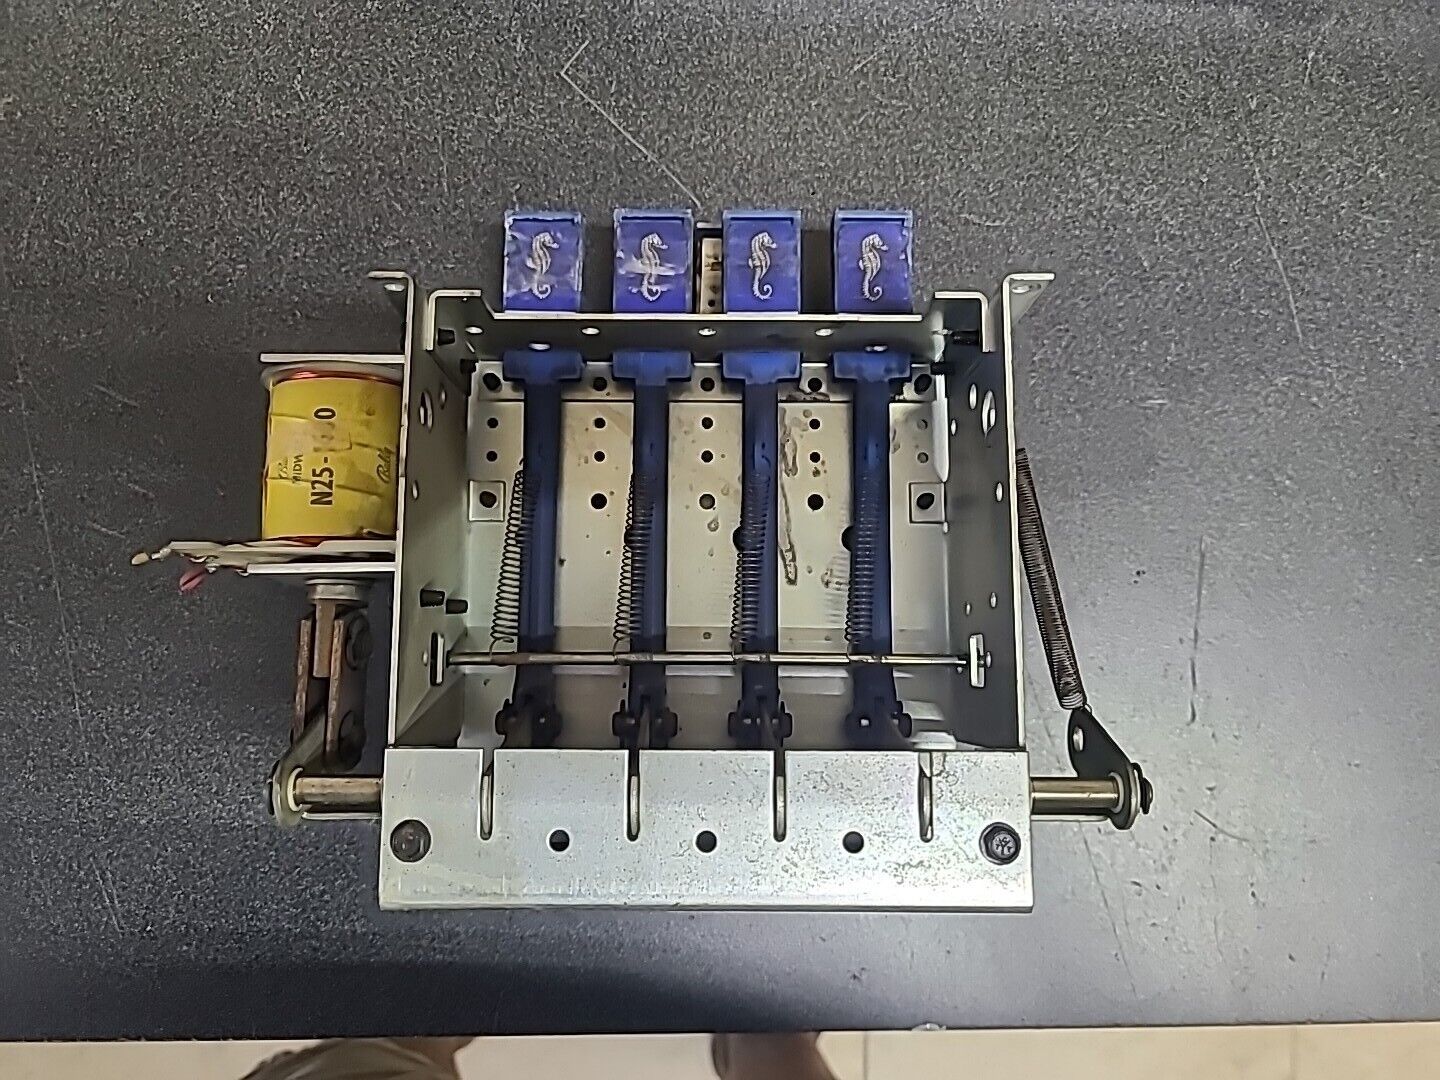 Bally Pinball Machine Used 4 Bank DROP TARGET Assembly from ATLANTIS